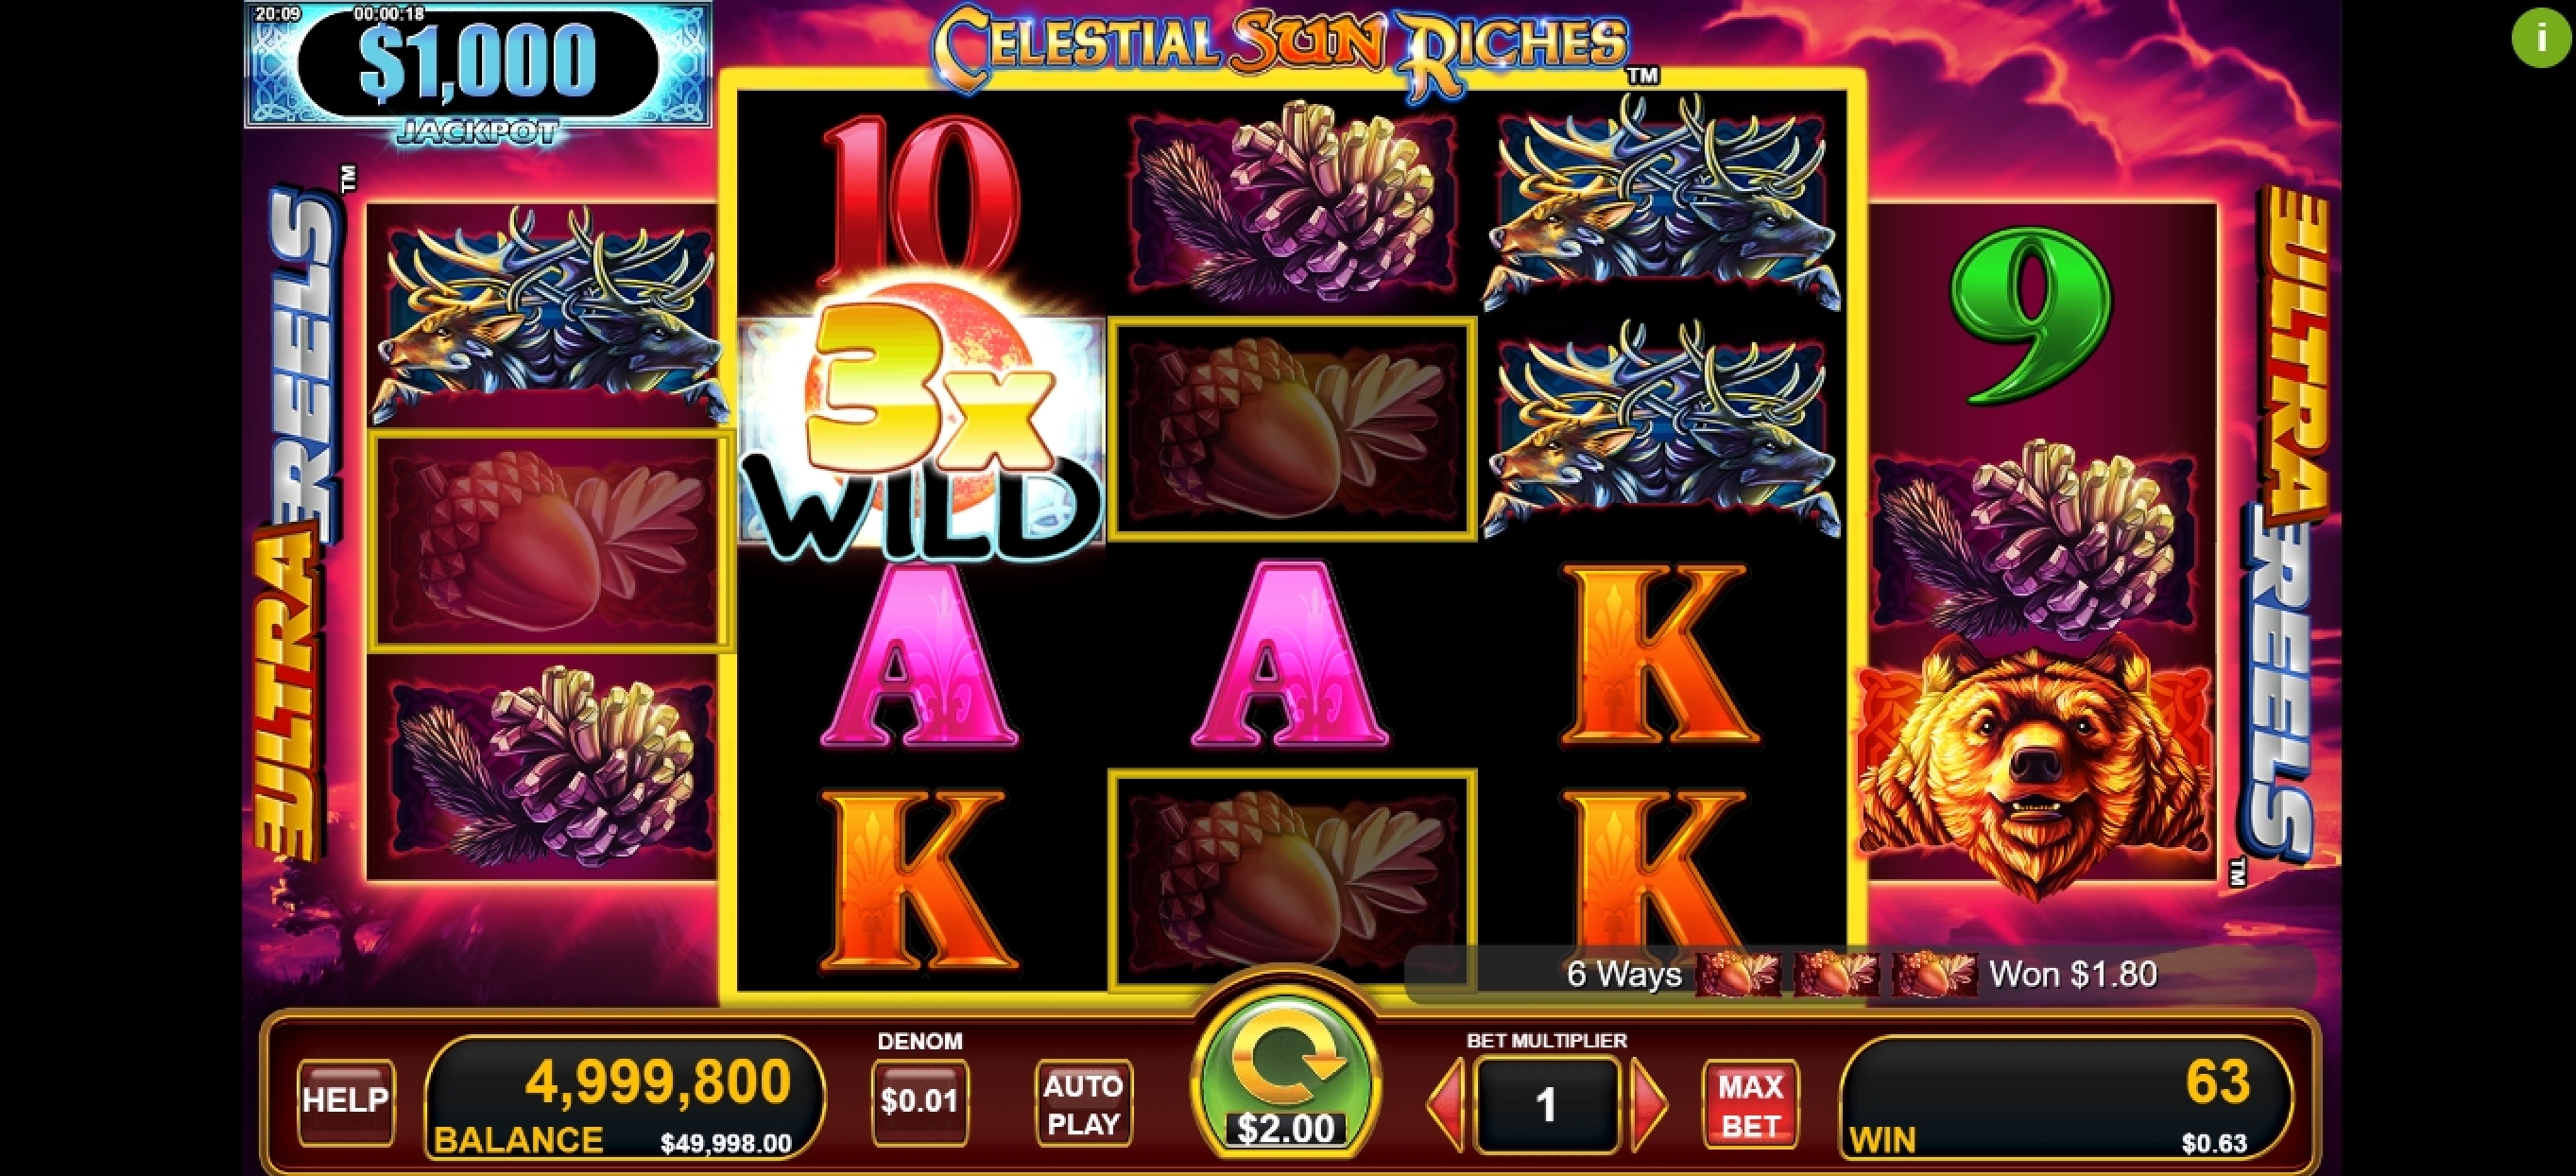 Multiplier Riches Slot Machine